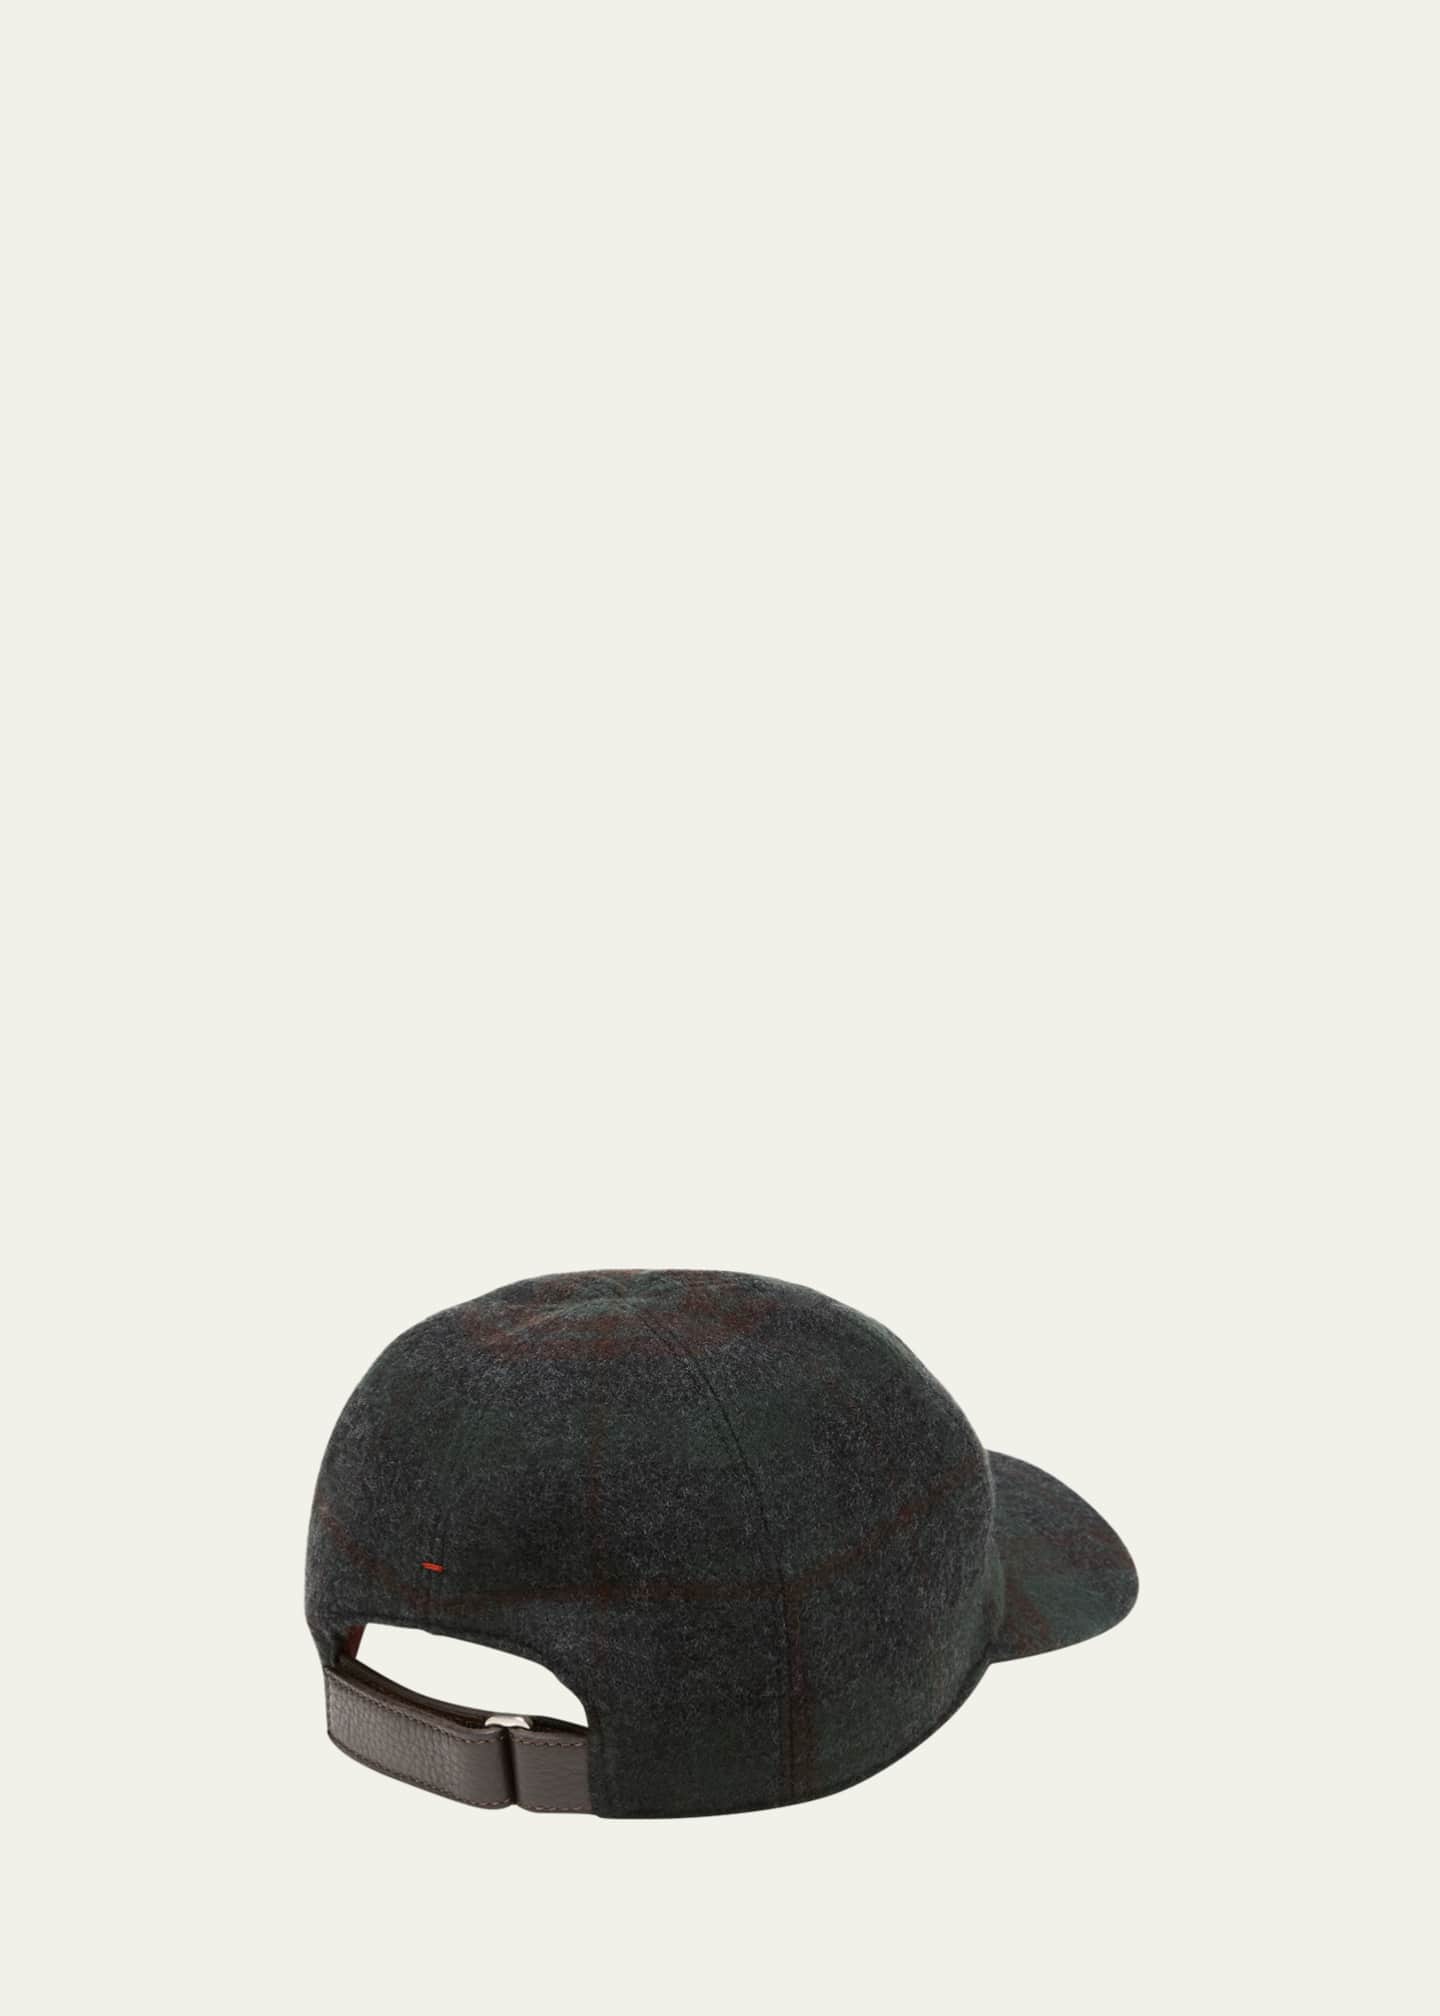 Cashmere Baseball Cap Dark Charcoal Small/Medium